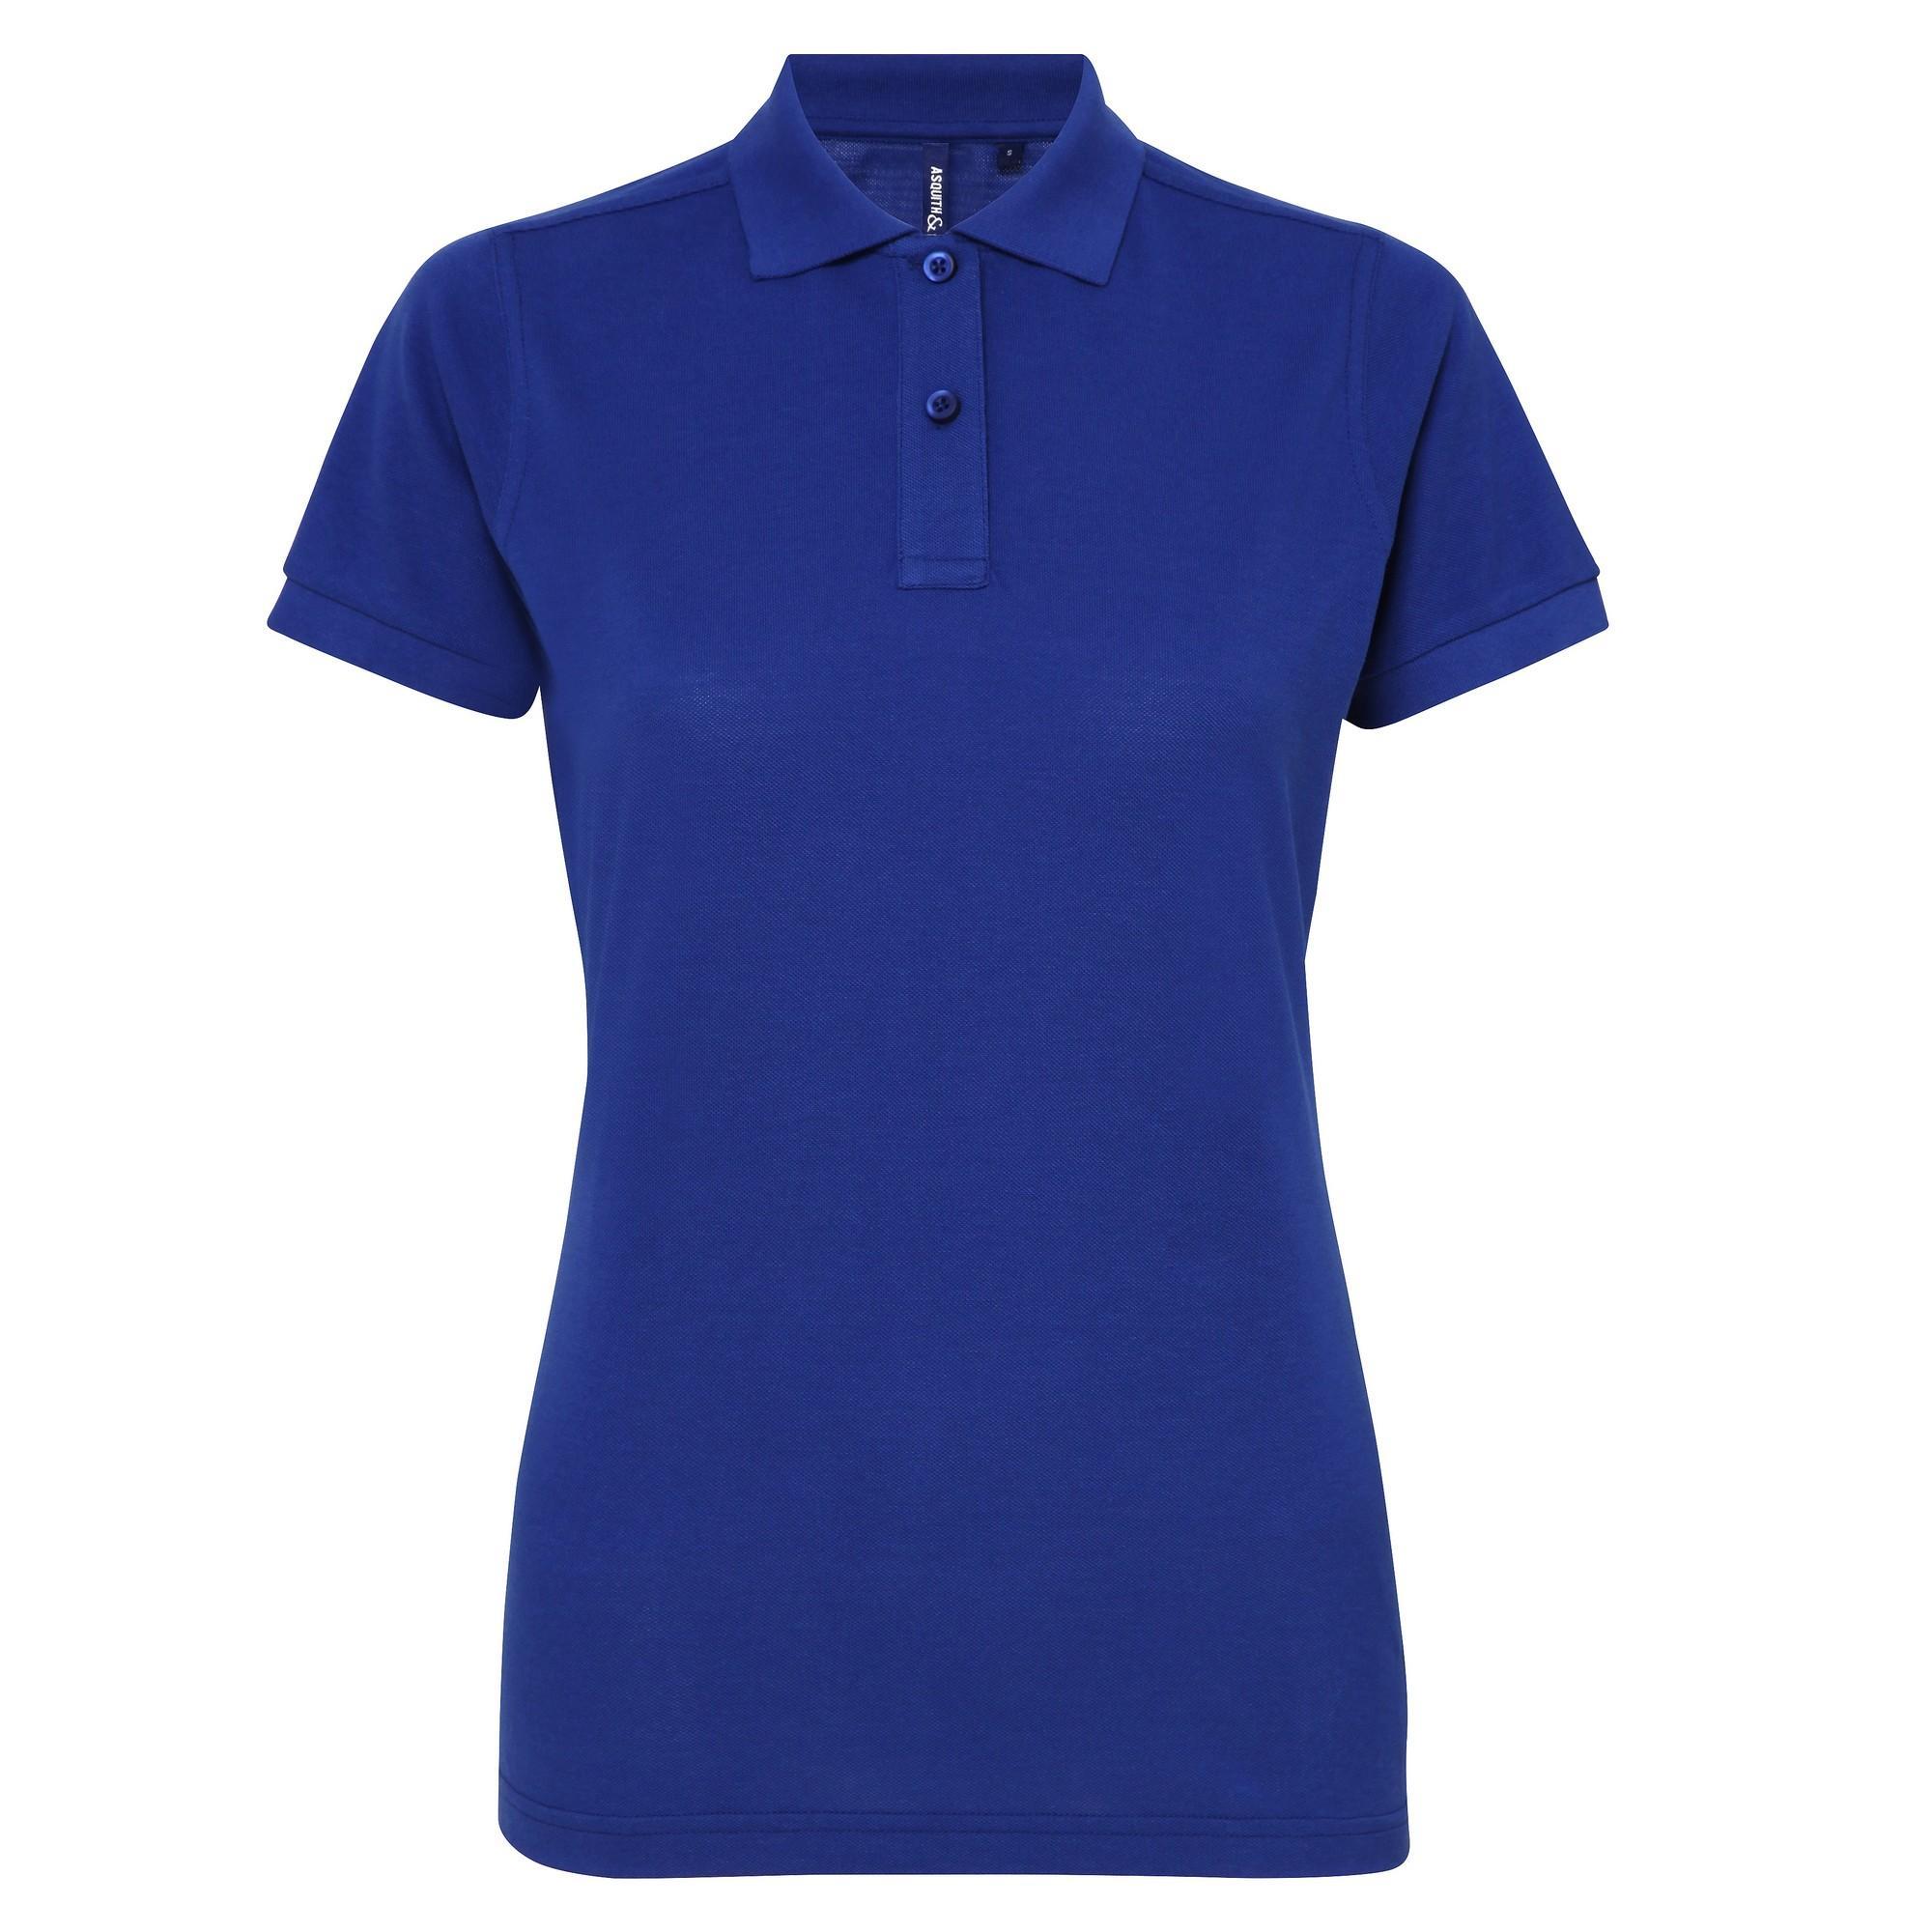 Asquith & Fox Womens/Ladies Short Sleeve Performance Blend Polo Shirt (Royal) (XL)